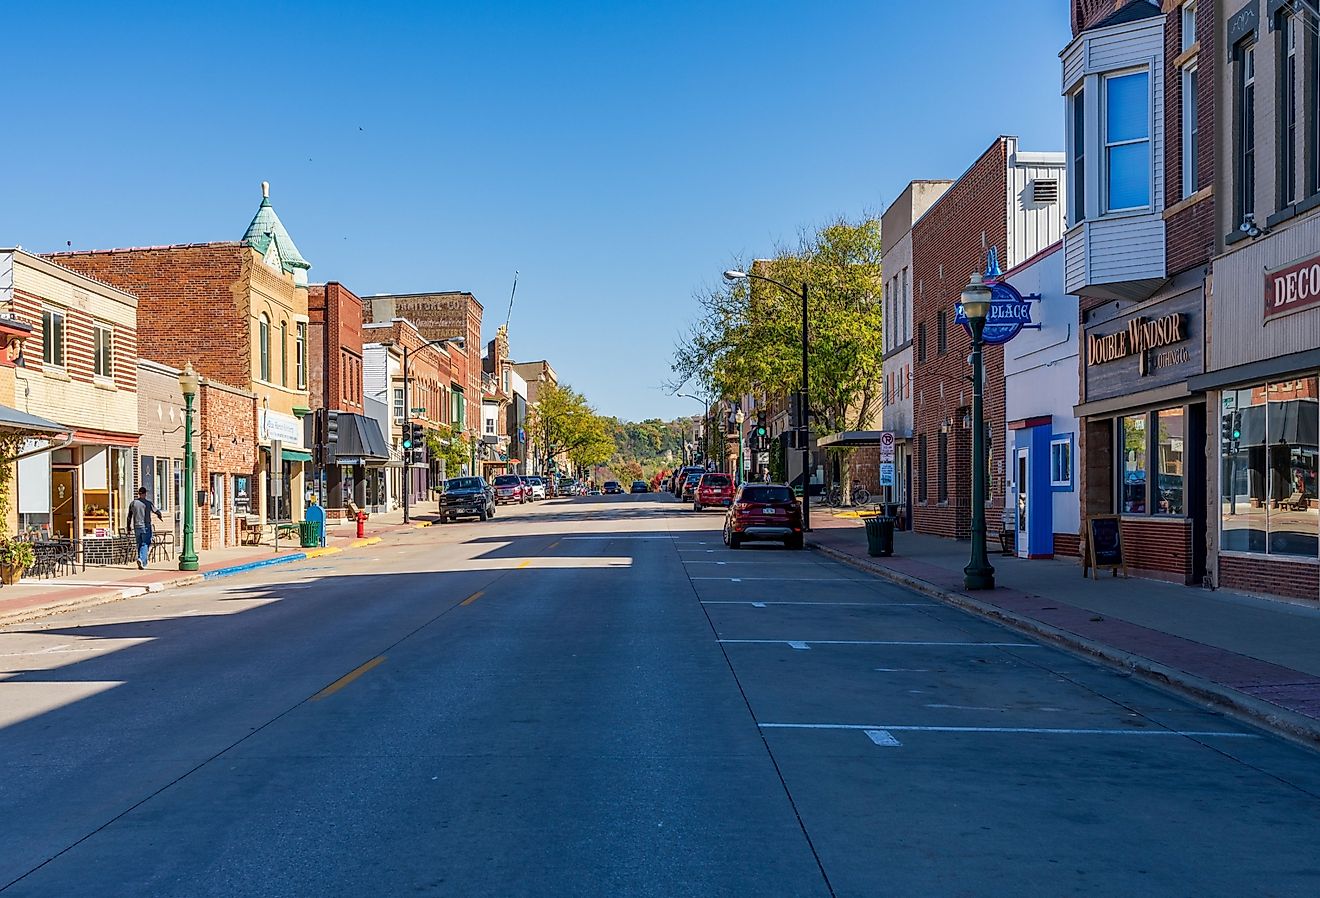 Shops and stores on W Water Street n Decorah, Iowa. Image credit Steve Heap via Shutterstock.